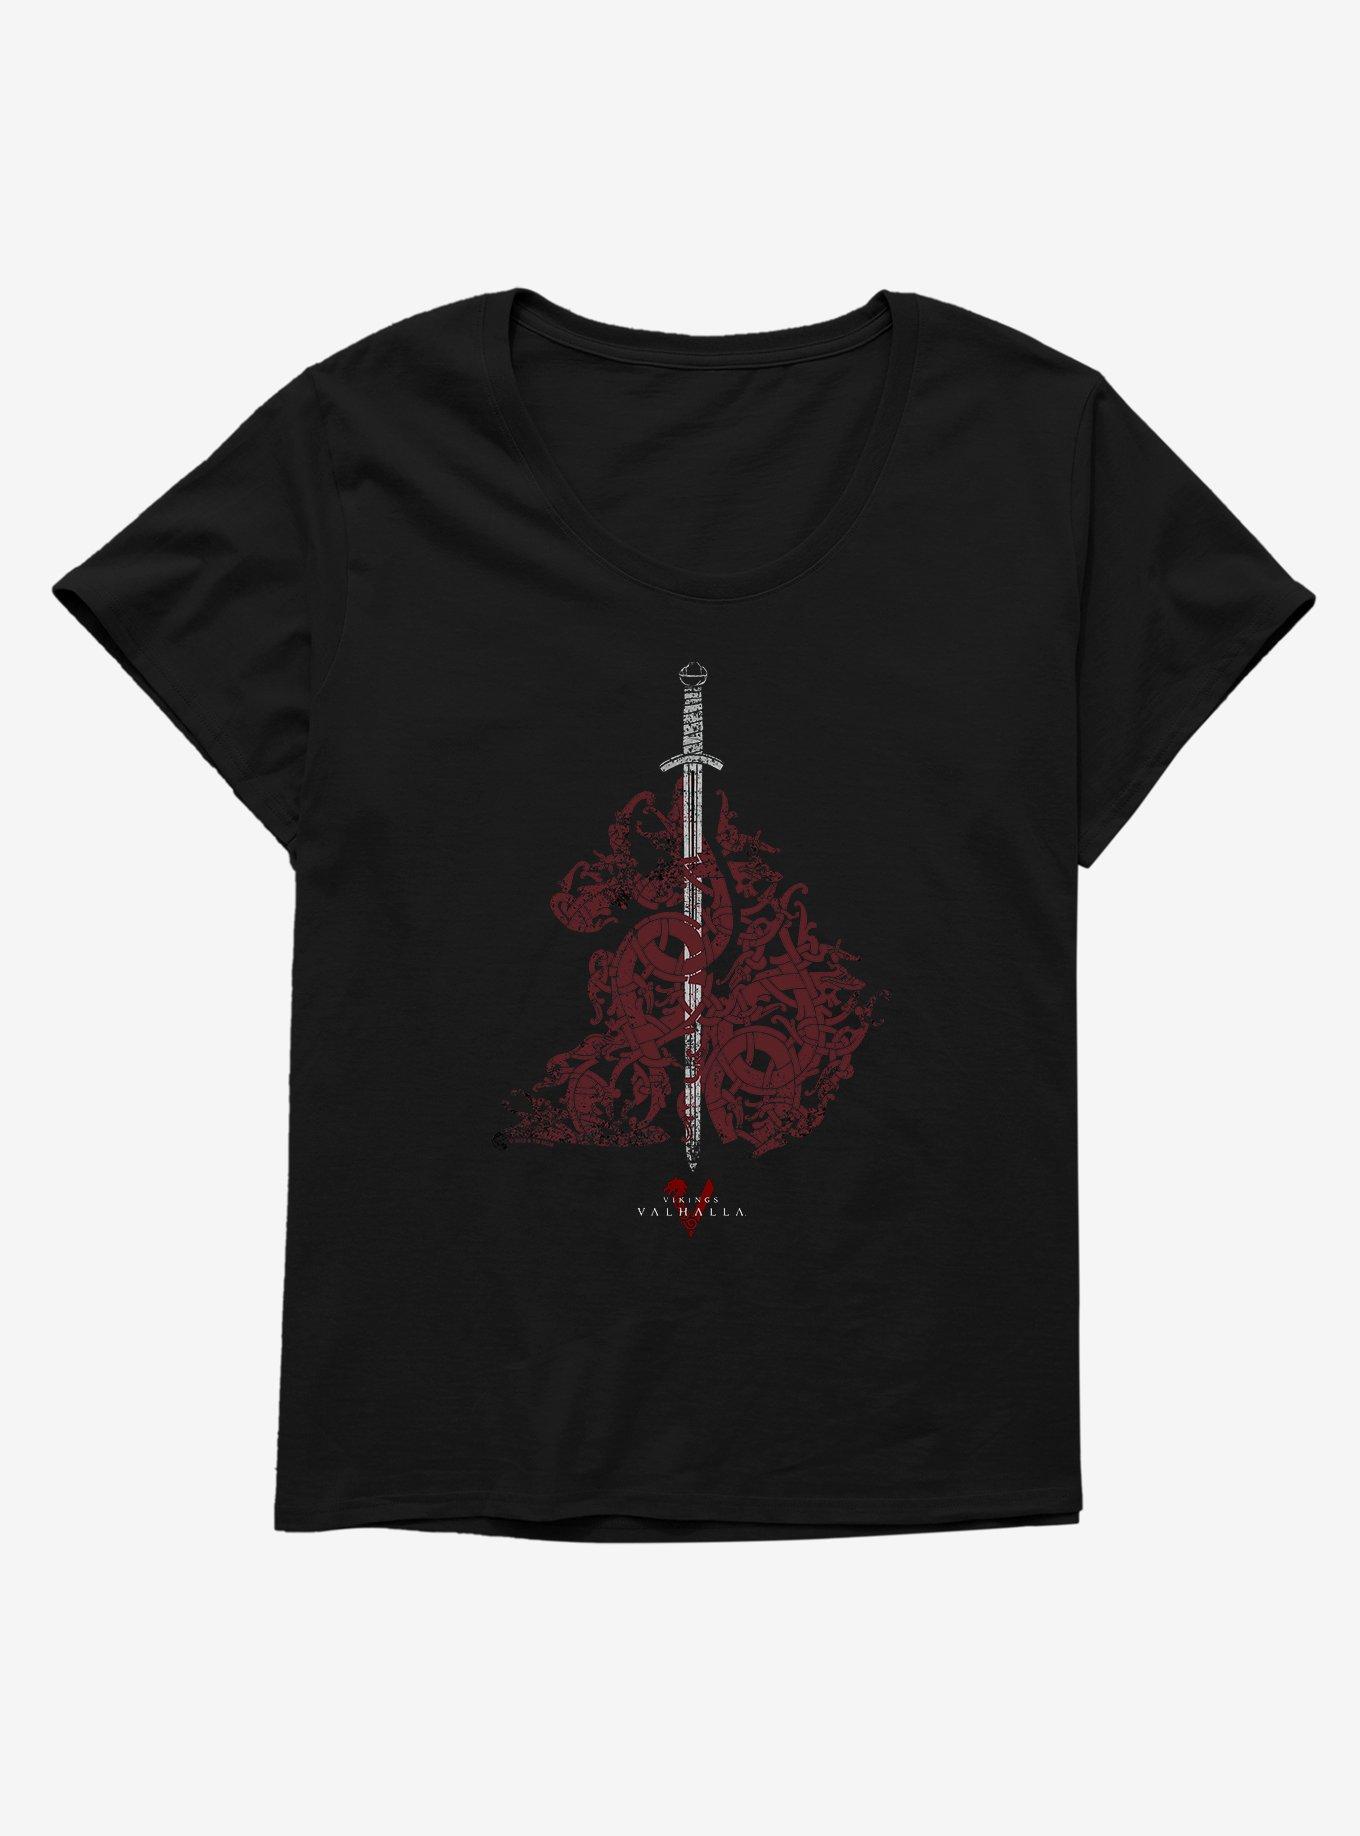 Vikings: Valhalla Sword With Thorns Girls T-Shirt Plus